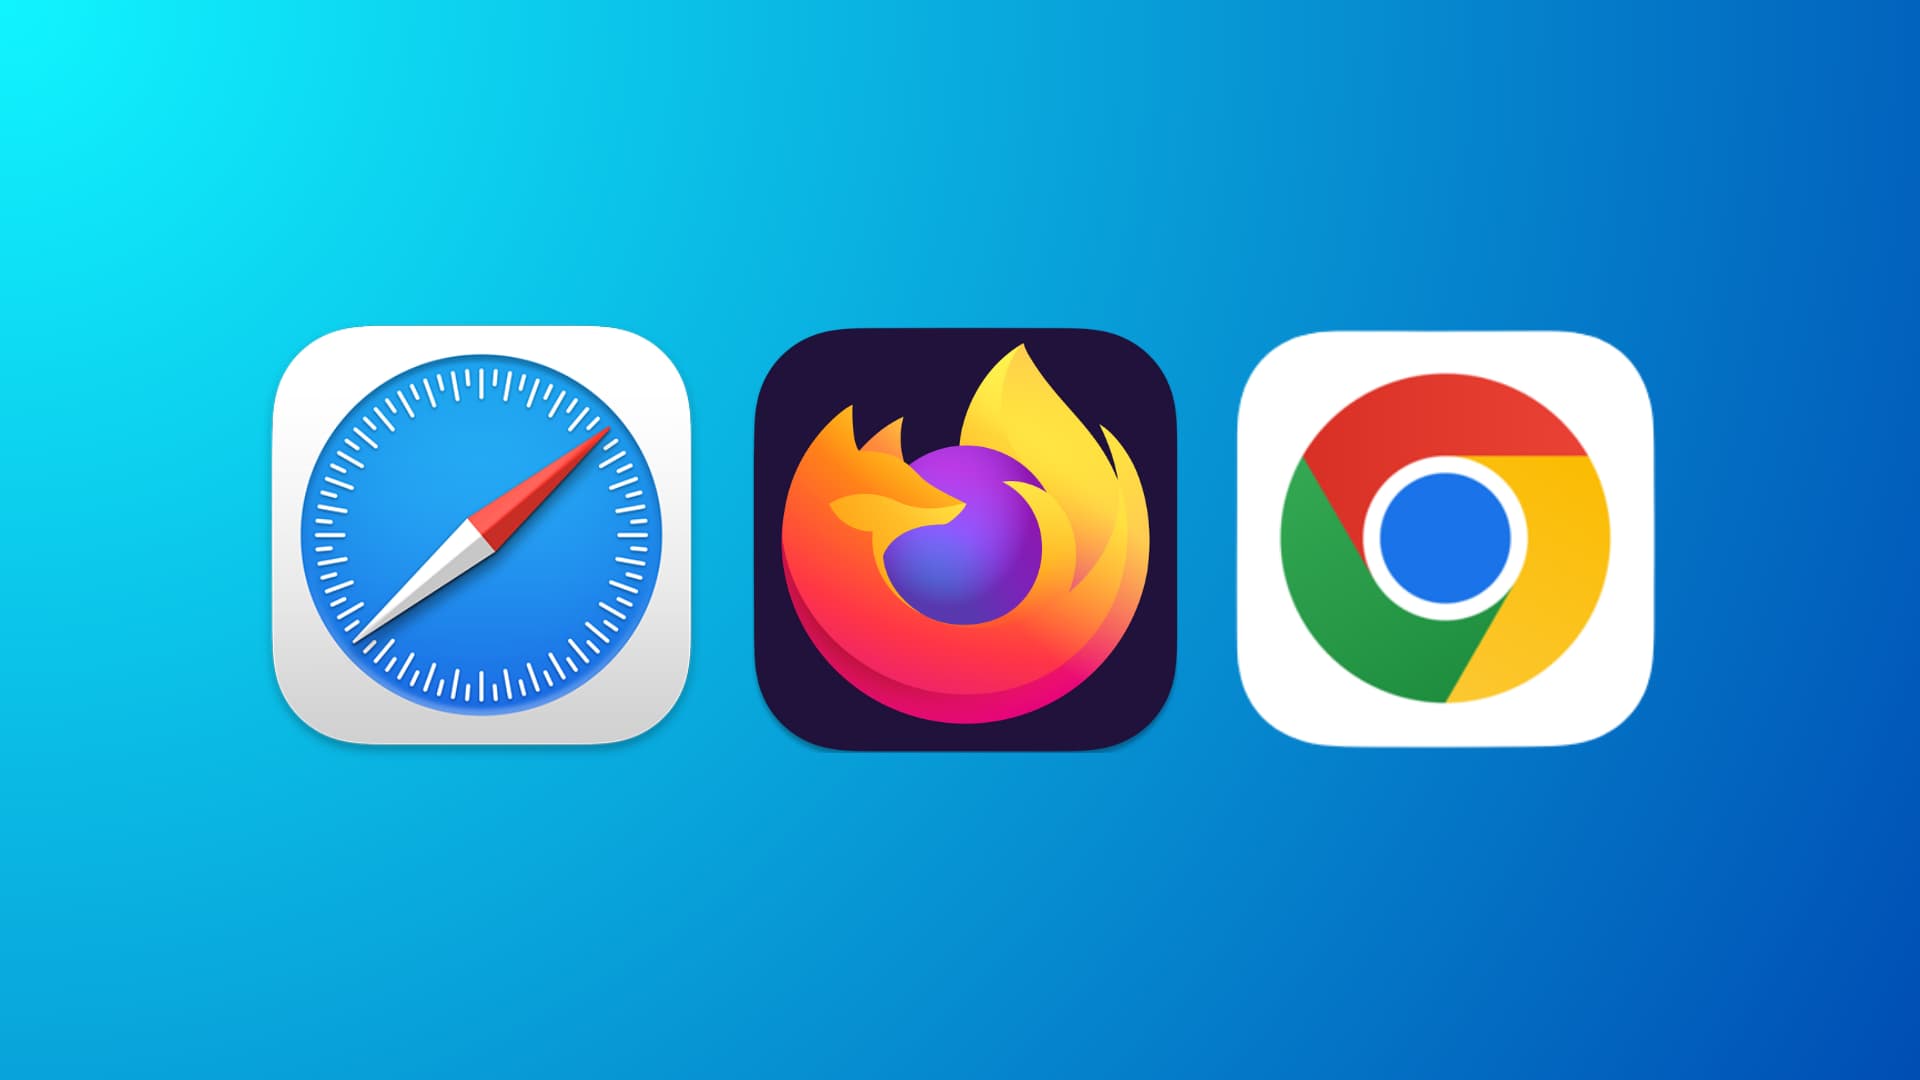 Safari, Firefox, and Chrome app icons